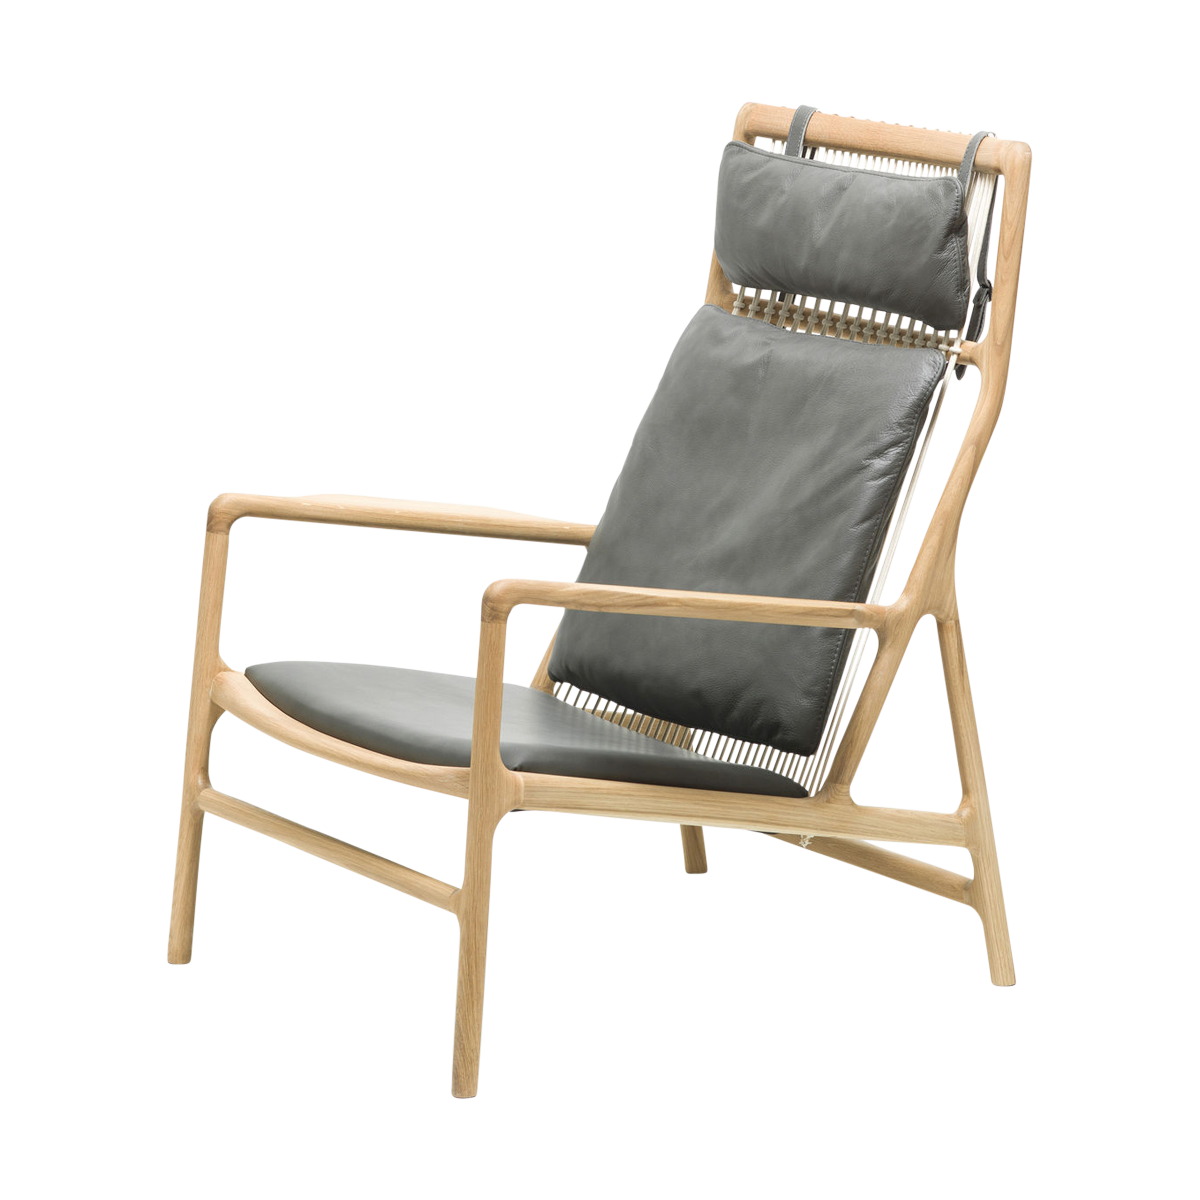 Dedo lounge chair - fauteuil dakar leather grey 1258